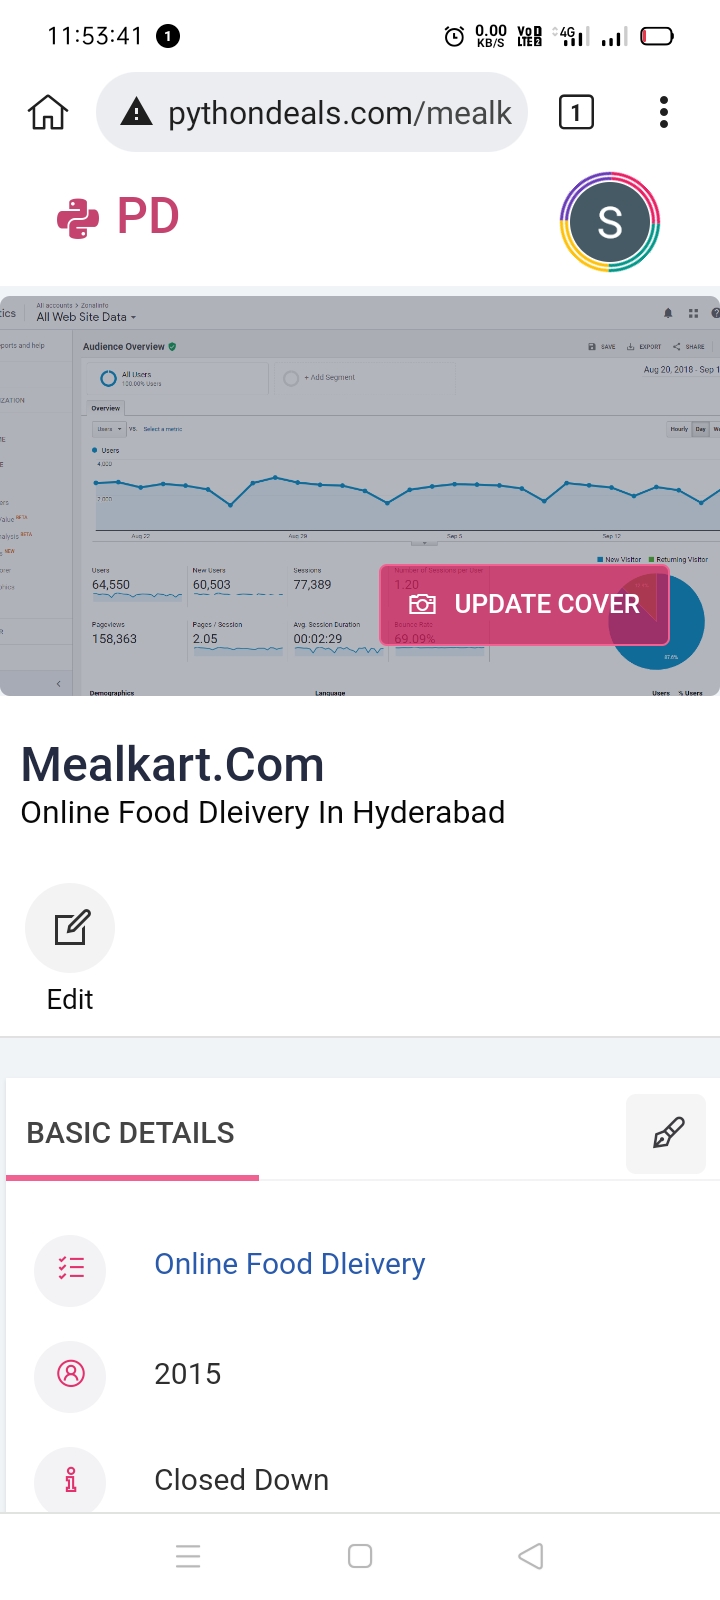 Mealkart.com